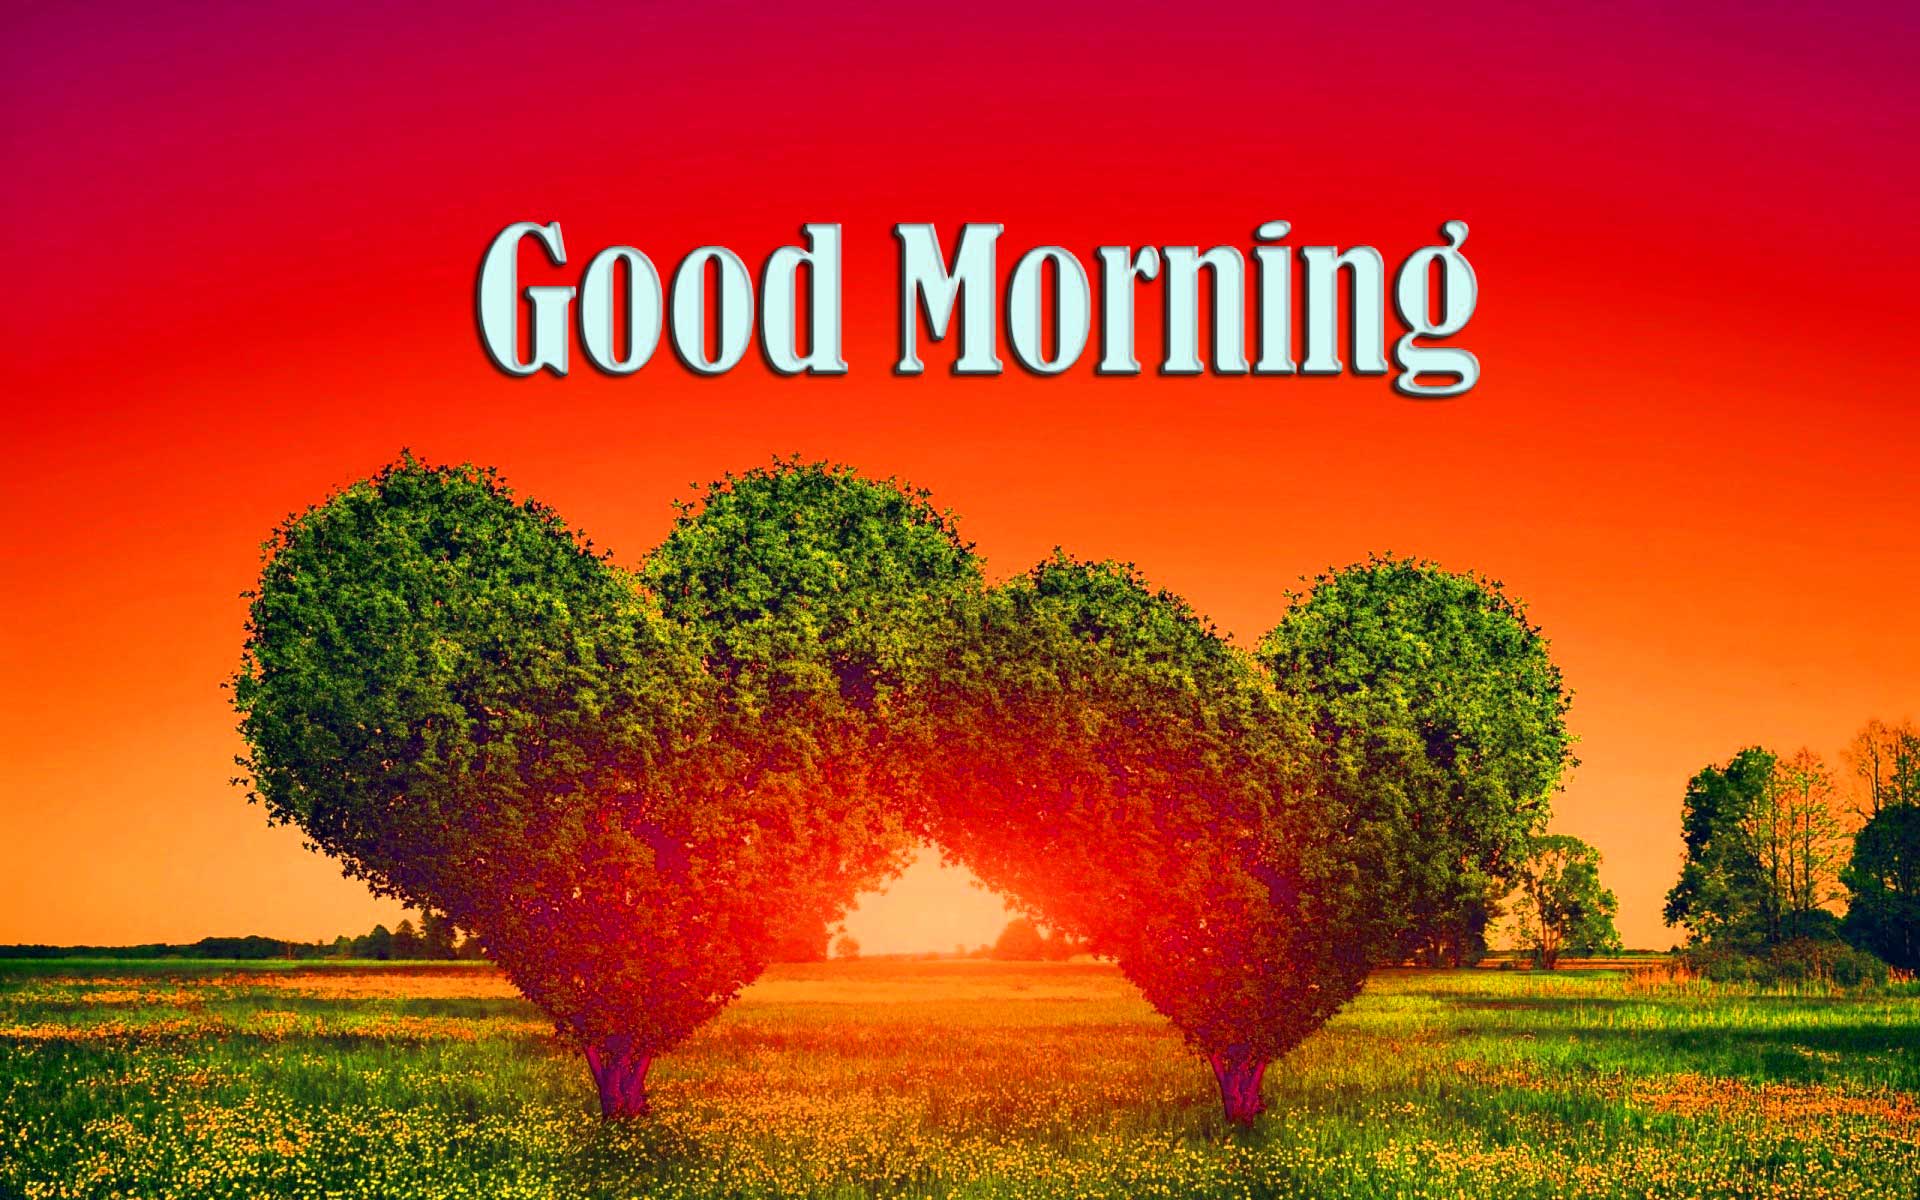 My beautiful morning. Открытки с добрым утром на английском языке. Good morning картинки. Доброе утро любимый на английском языке. Good morning картинки красивые.